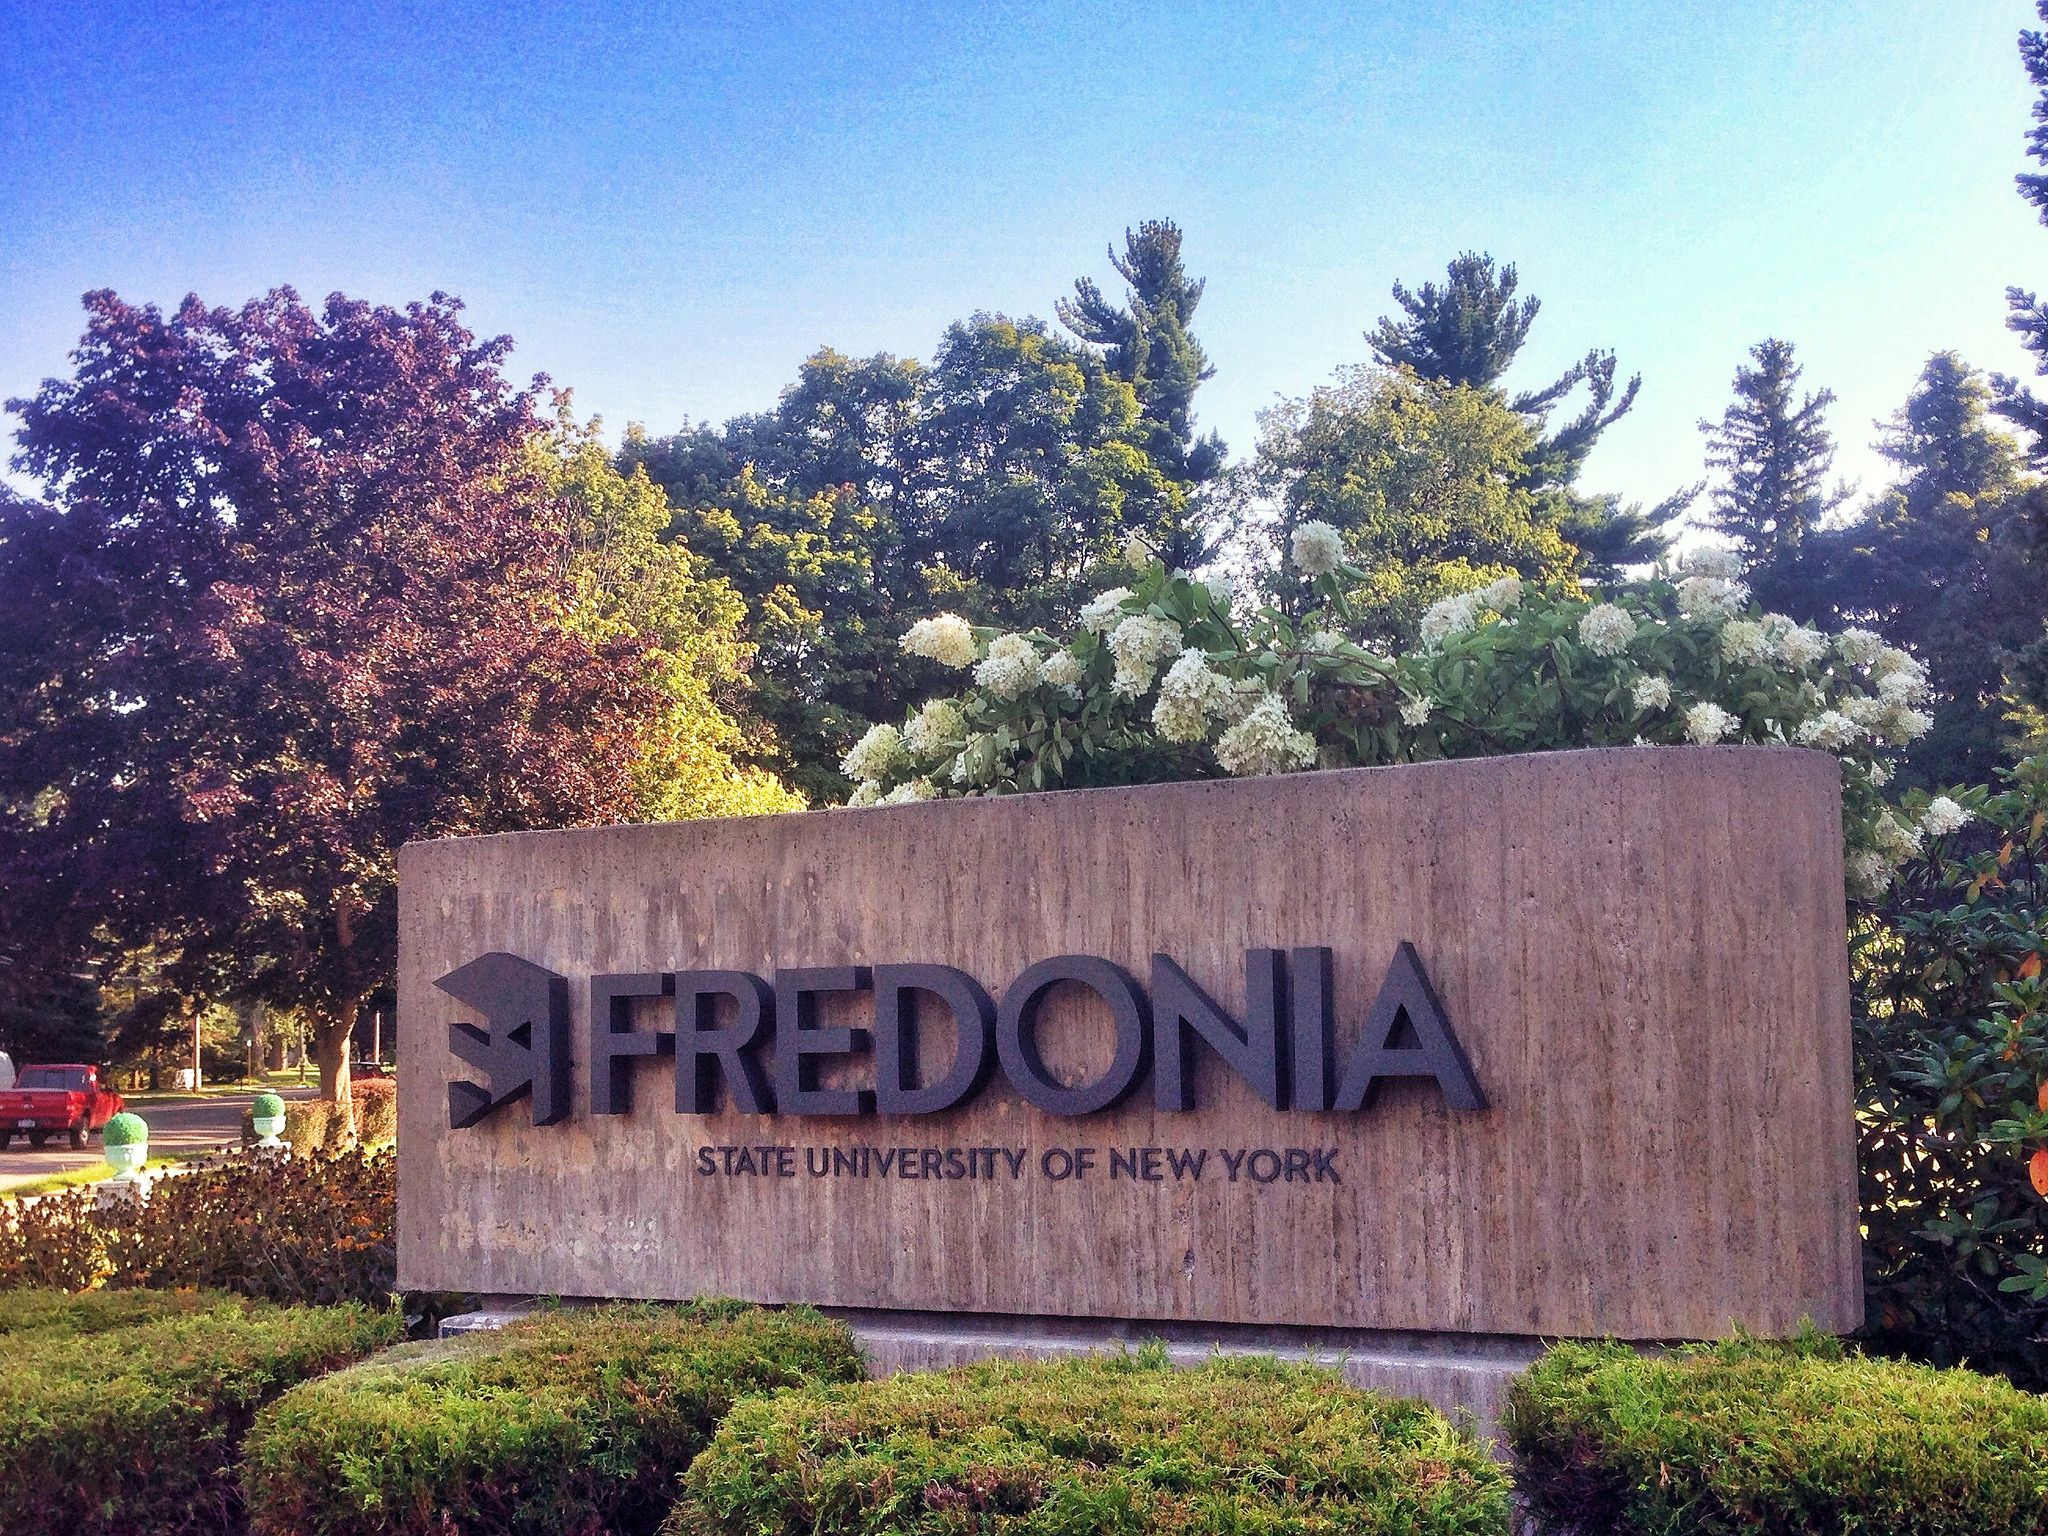 SUNY at Fredonia in Fredonia, New York